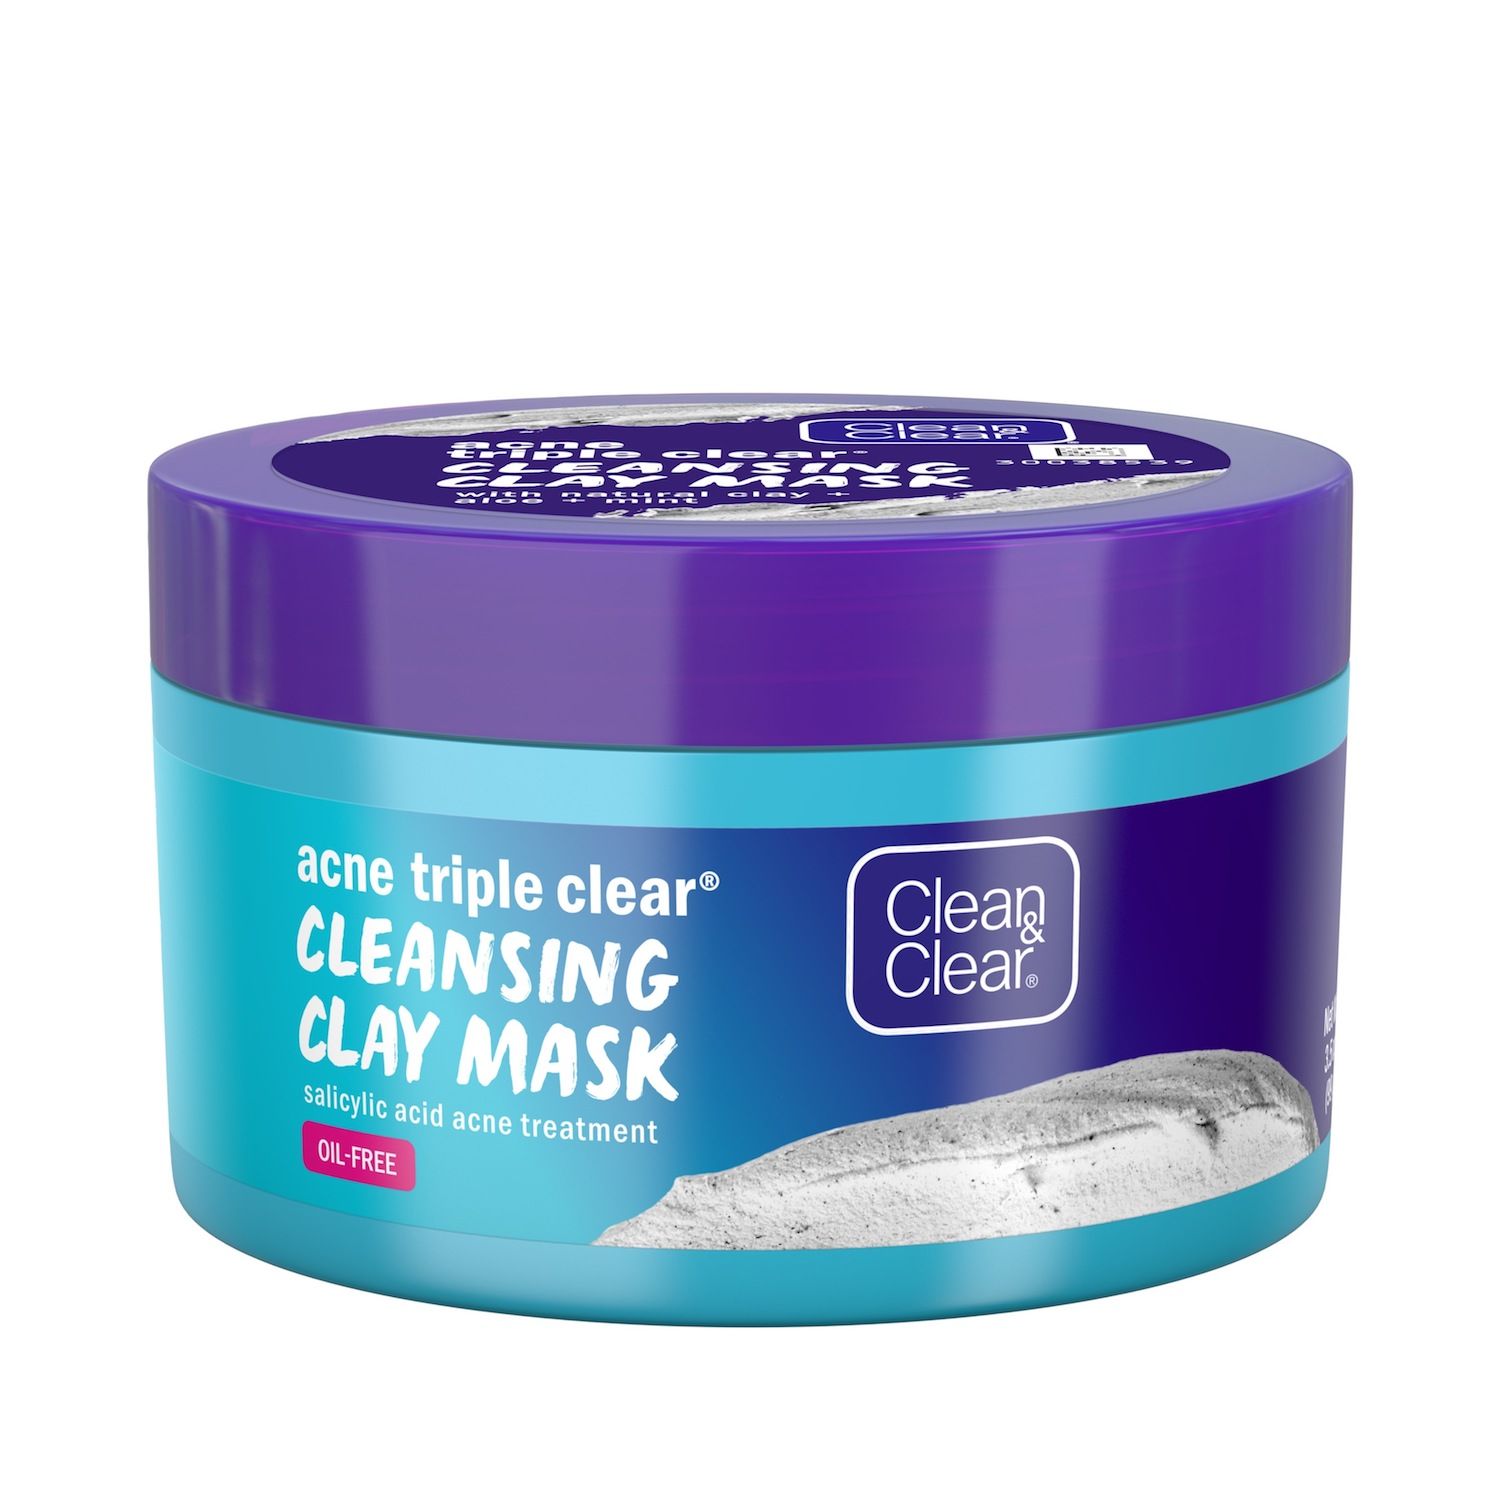 Clean & Clear Akne Triple Clear Clay Gesichtsmaske